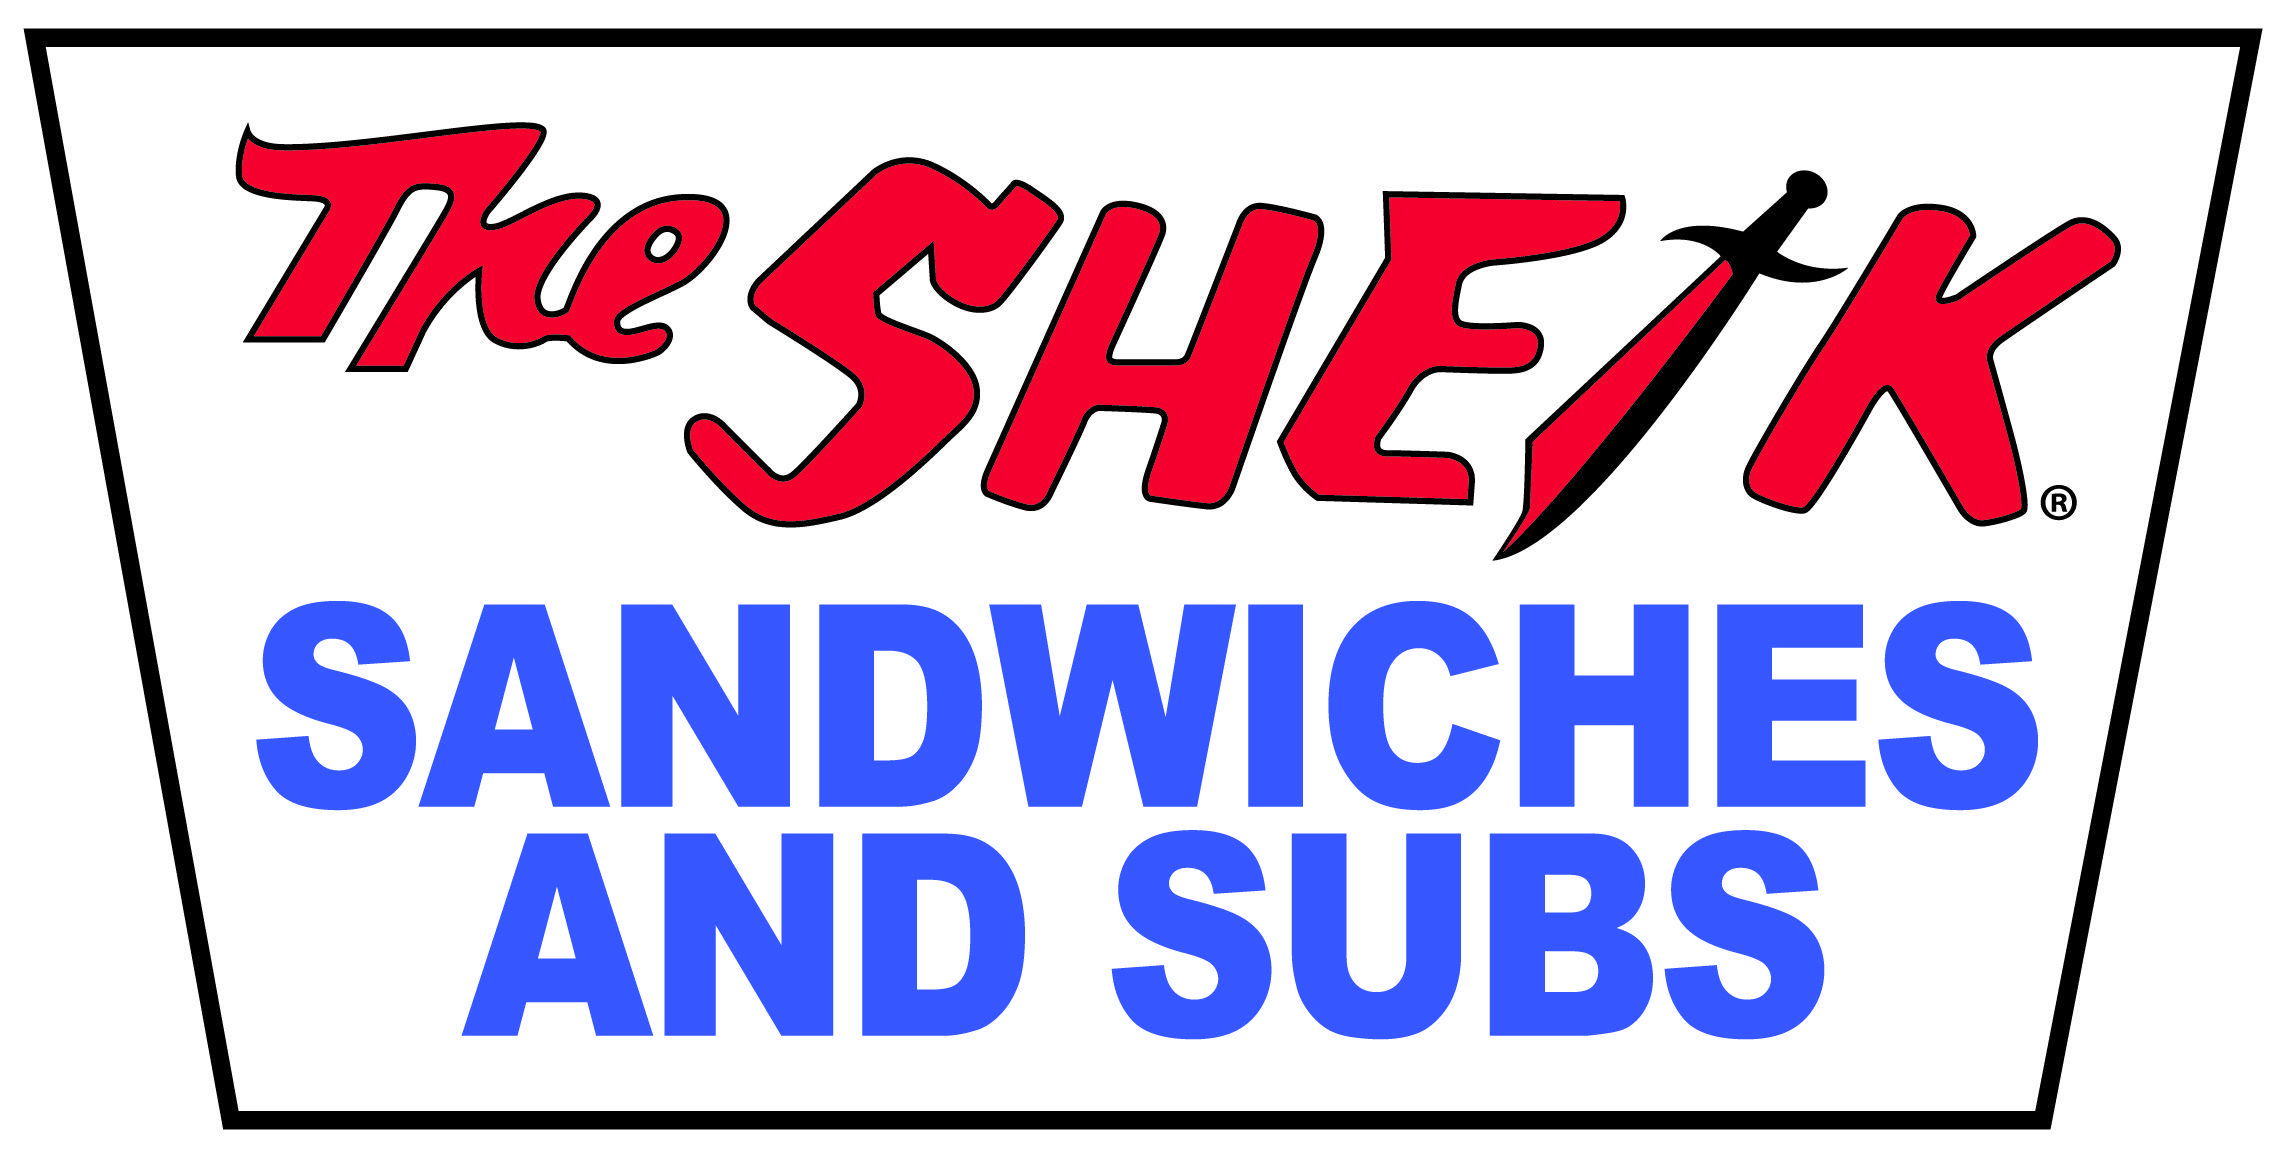 Shiek Logo - About. The Sheik Sandwiches & Subs